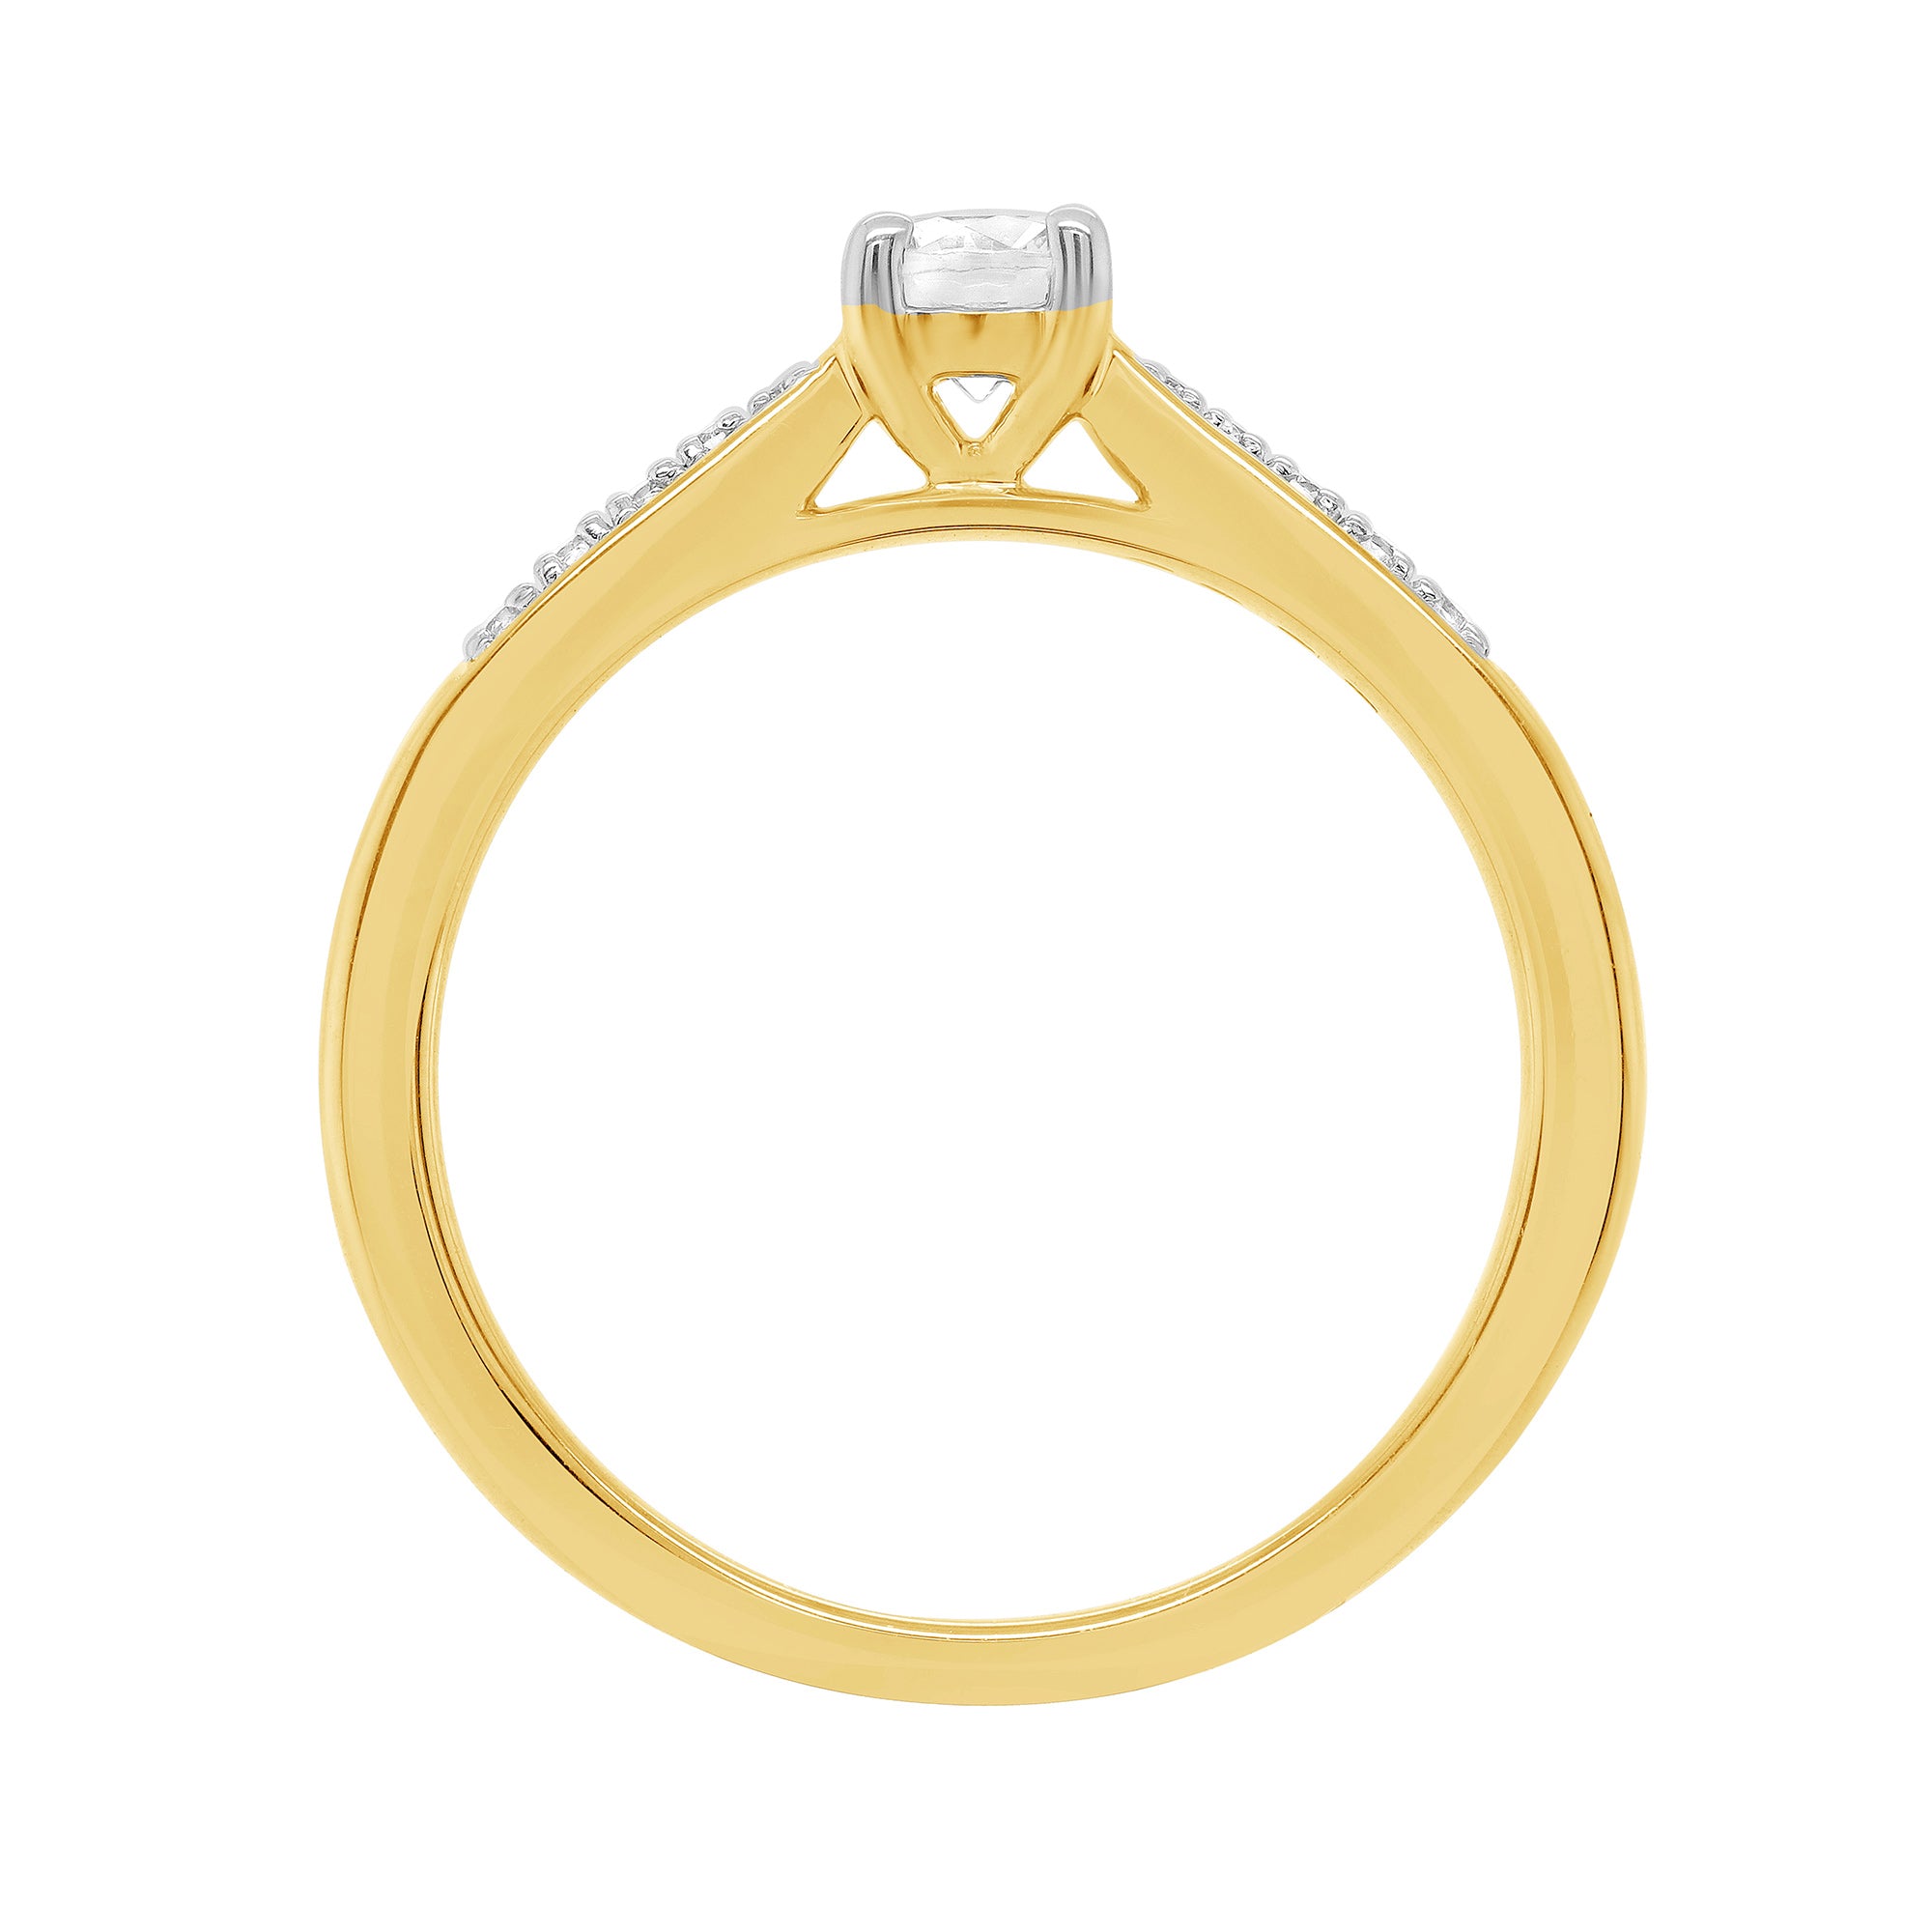 9ct gold single stone diamond ring with diamond set shoulders 0.41ct